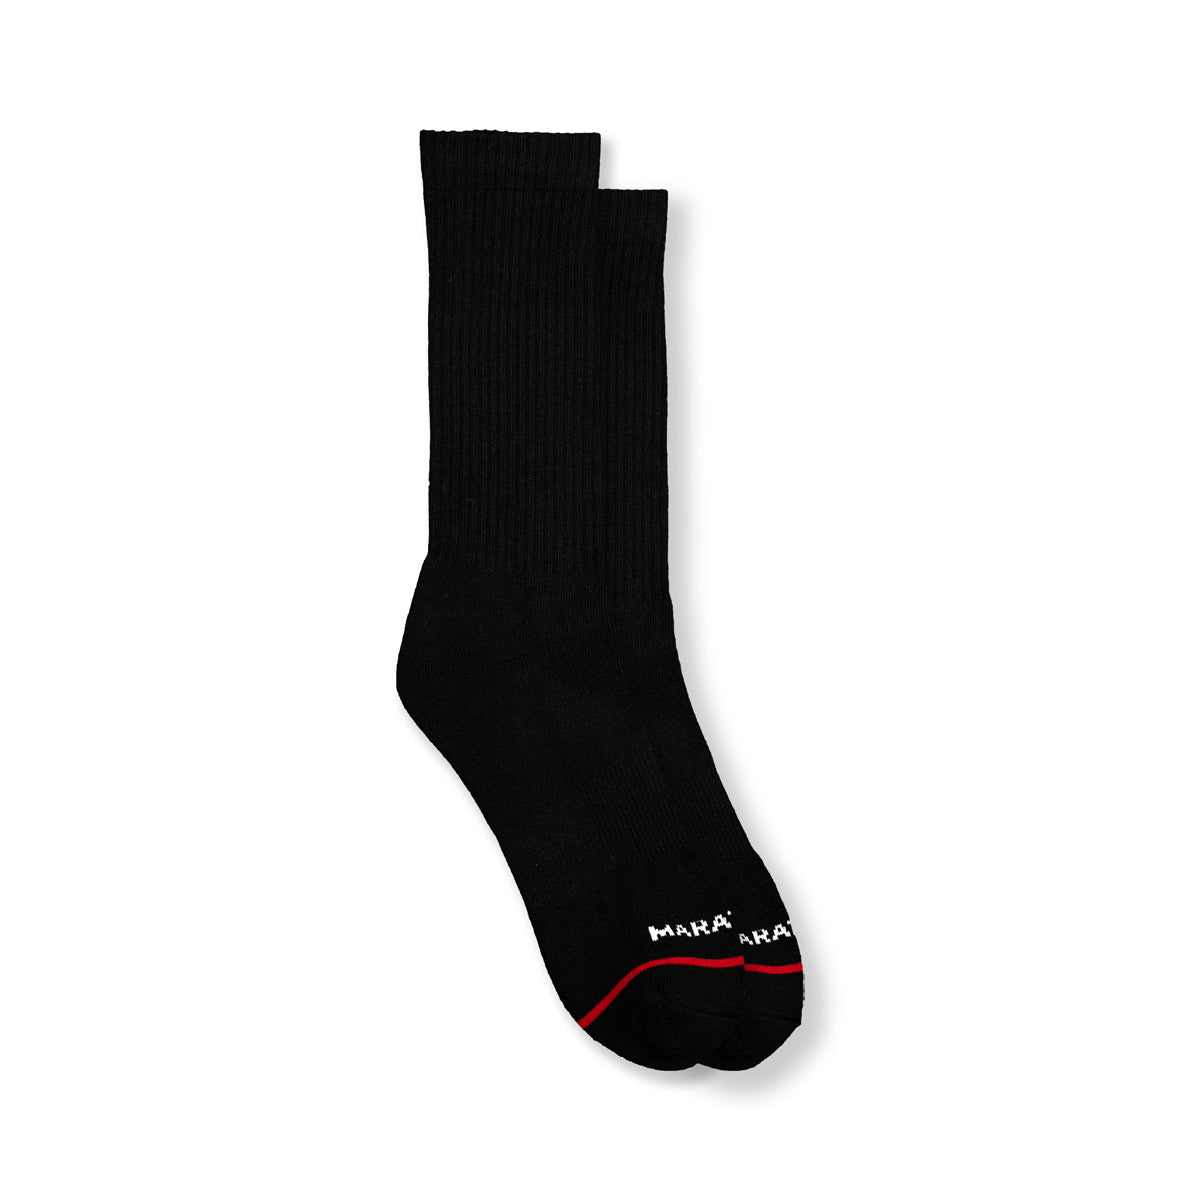 The Marathon Clothing Socks - Black Marathon Wordmark